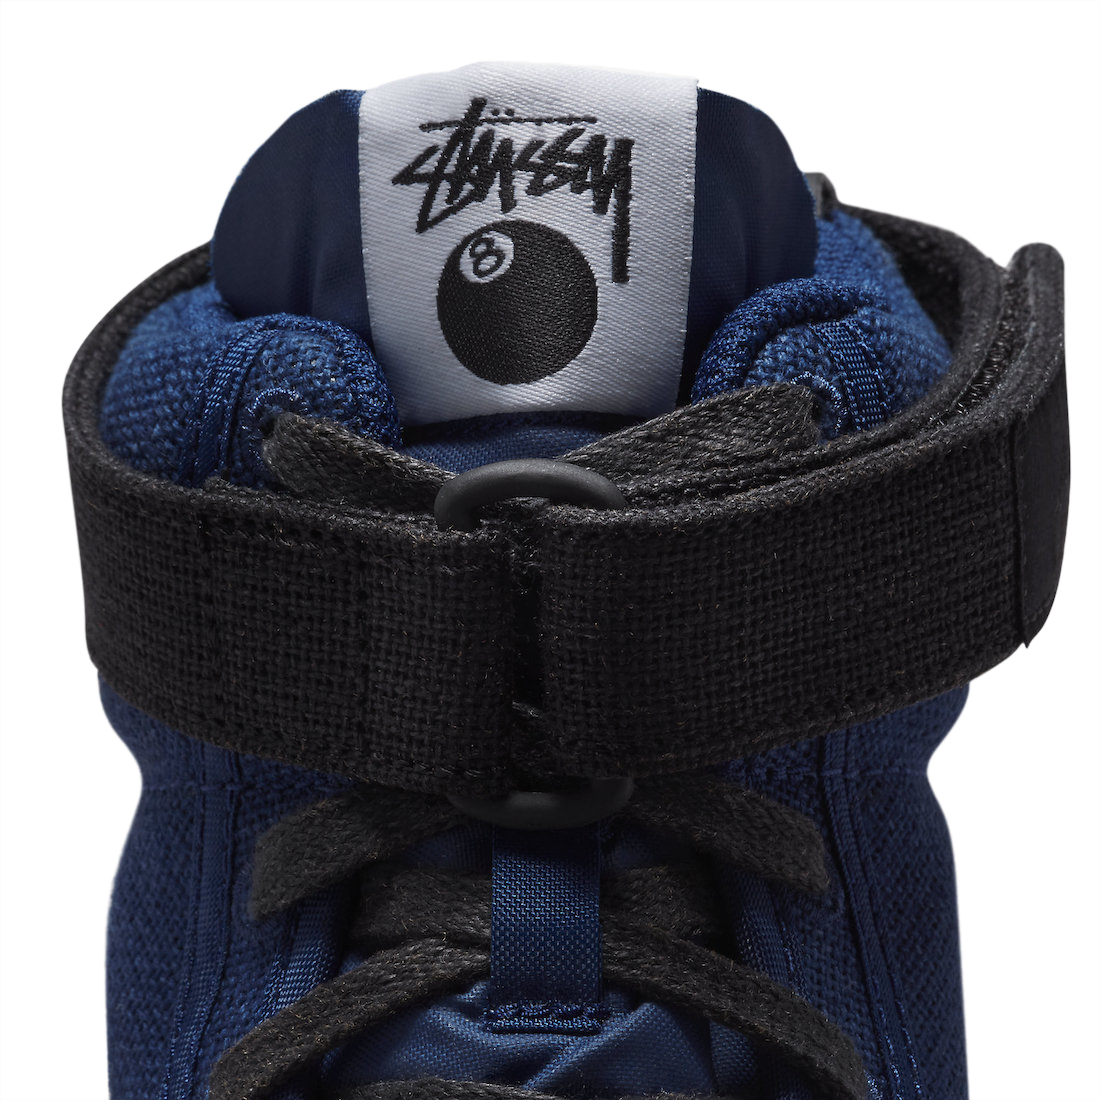 Stussy x Nike Vandal High Deep Royal Blue - Jun 2023 - DX5425-400 -  KicksOnFire.com